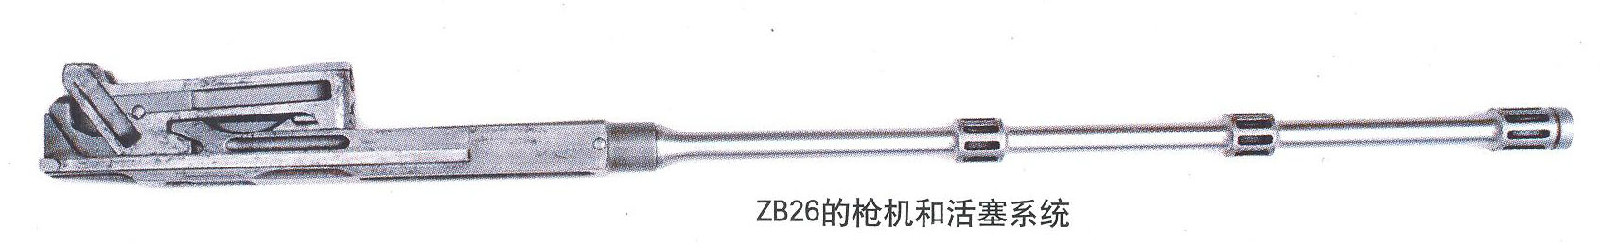 ZB26槍機和活塞系統